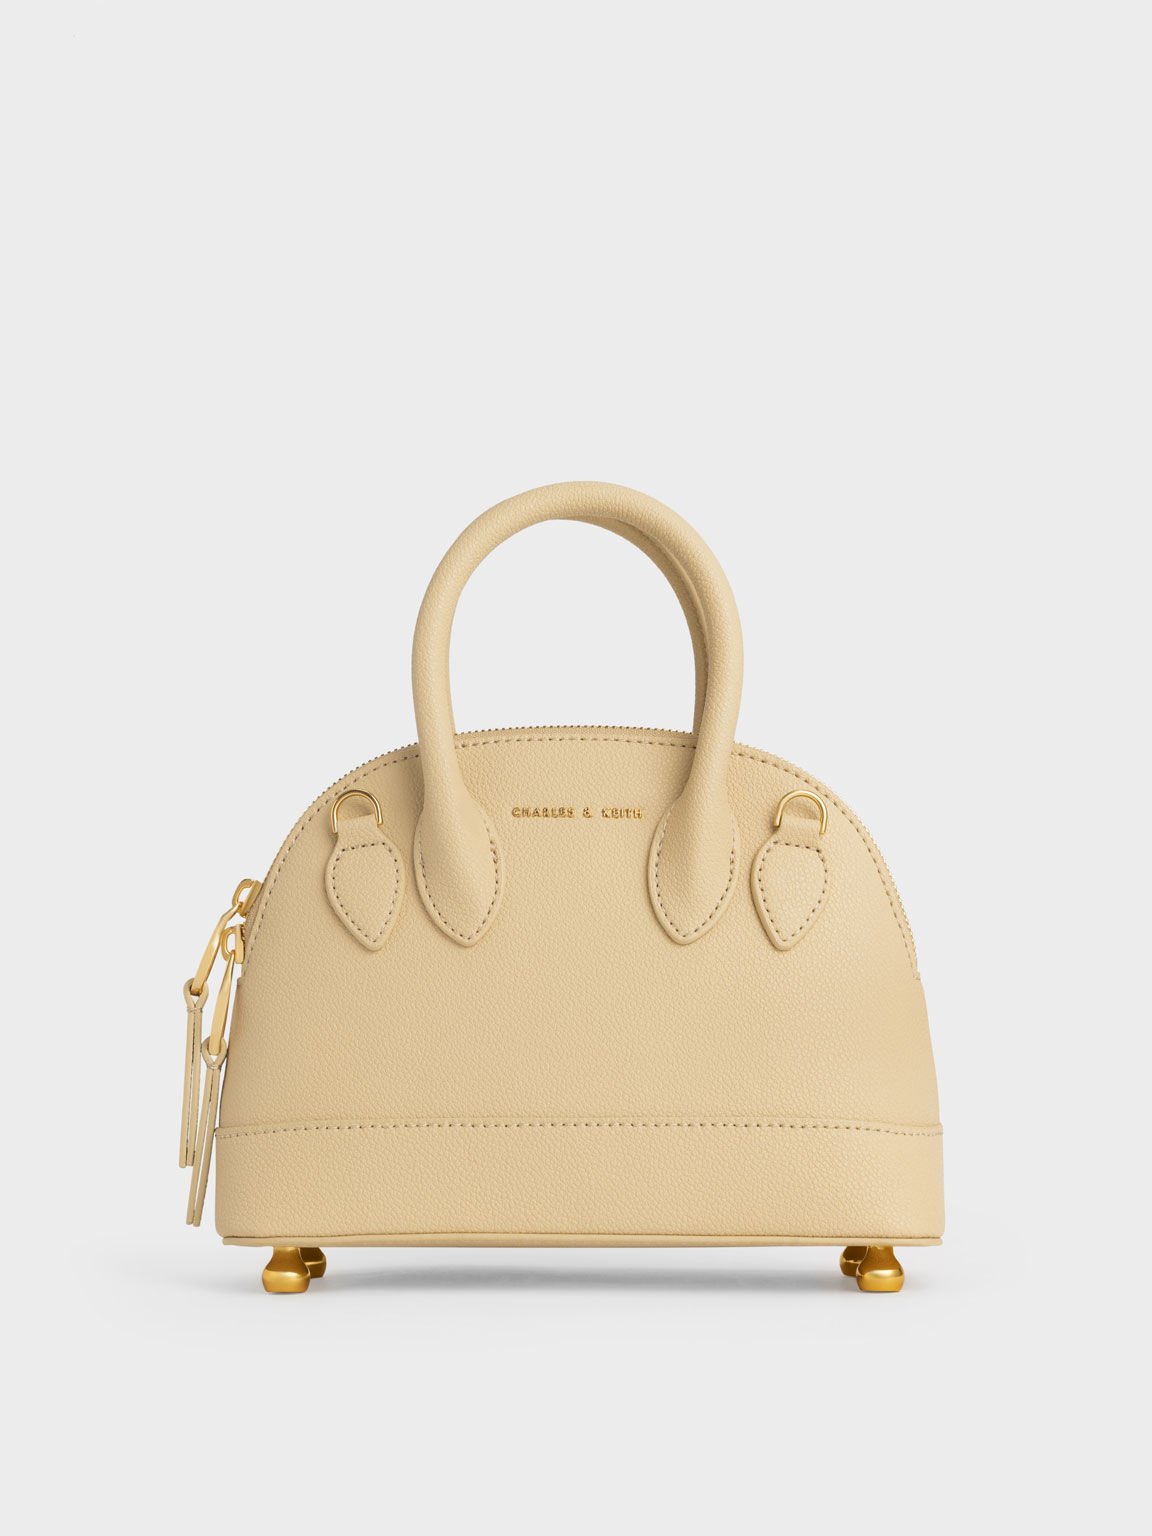 Blue Yellow Bowling Bag  Women's Designer Handbag